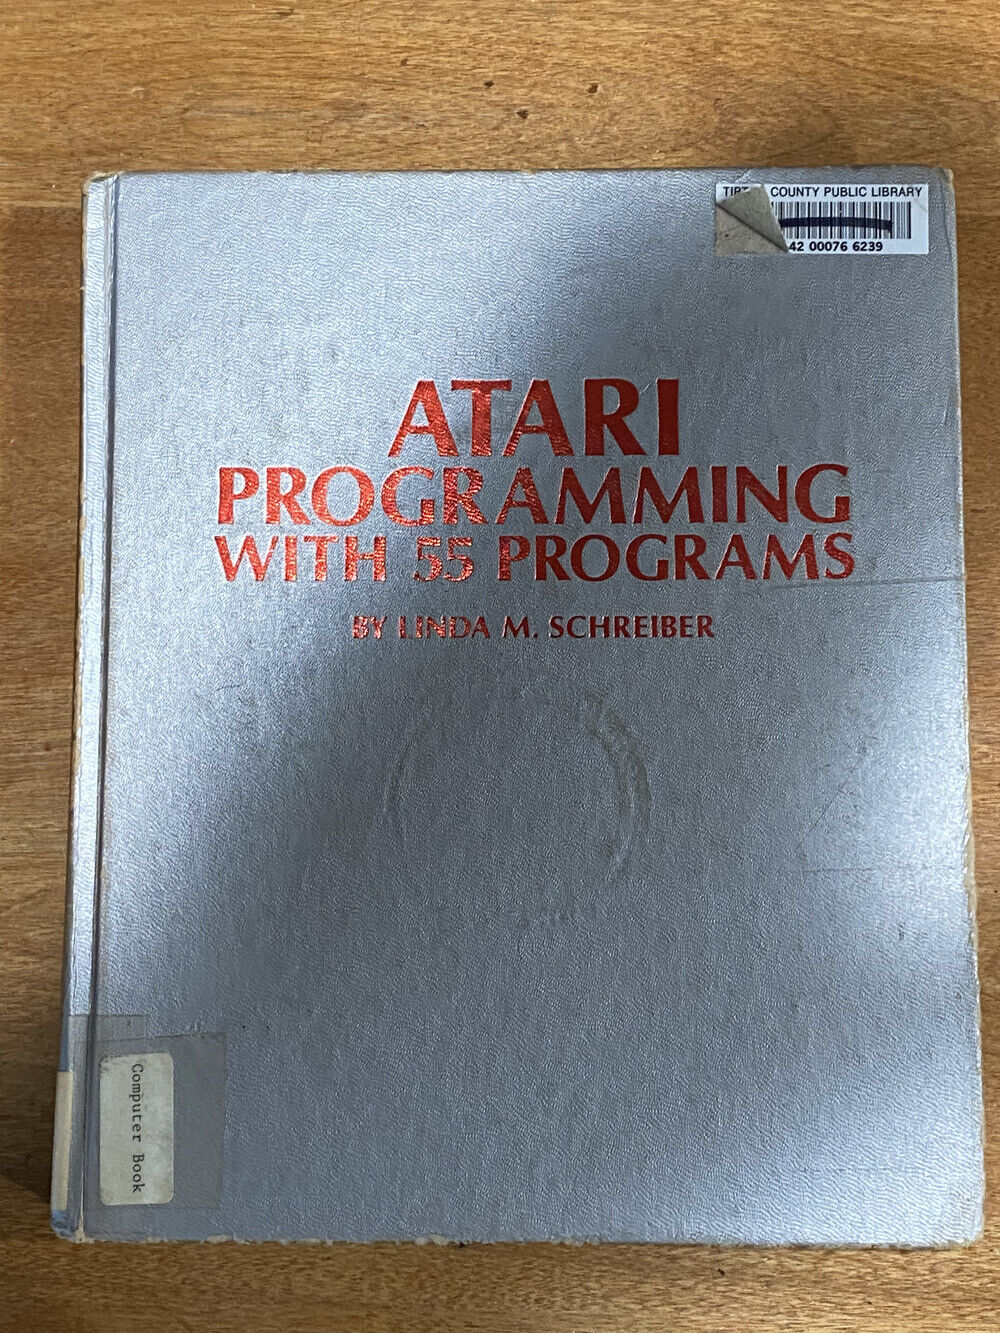 “Atari Programming With 55 Programs” hardcover book by Linda M. Schreiber